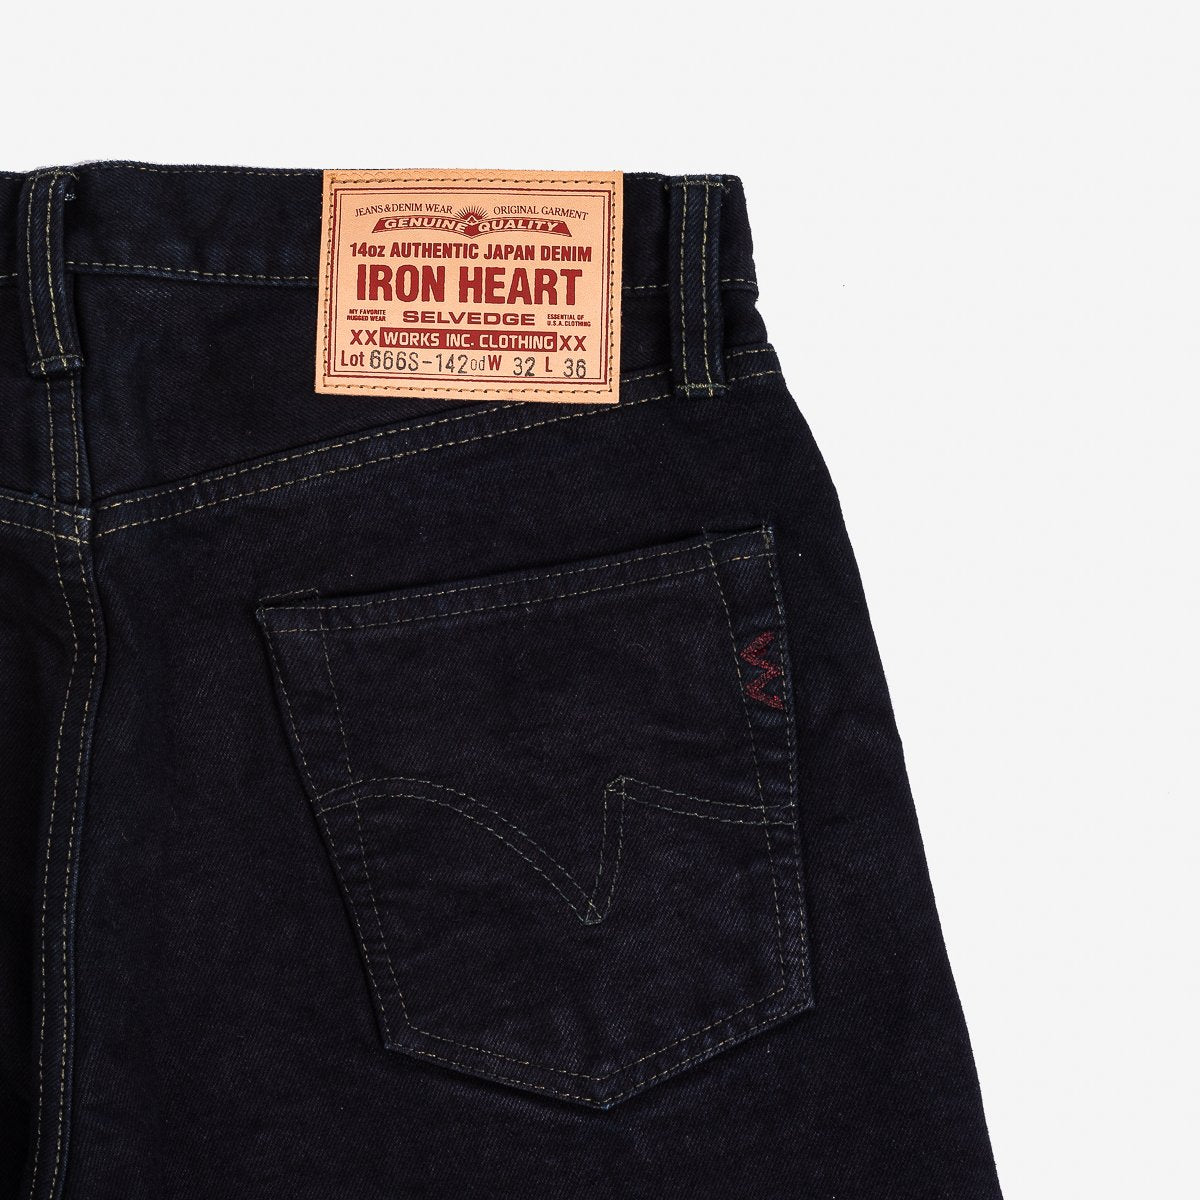 Iron Heart IH-666S-142od 14oz Selvedge Denim Slim Straight Cut Jeans - Indigo Overdyed Black